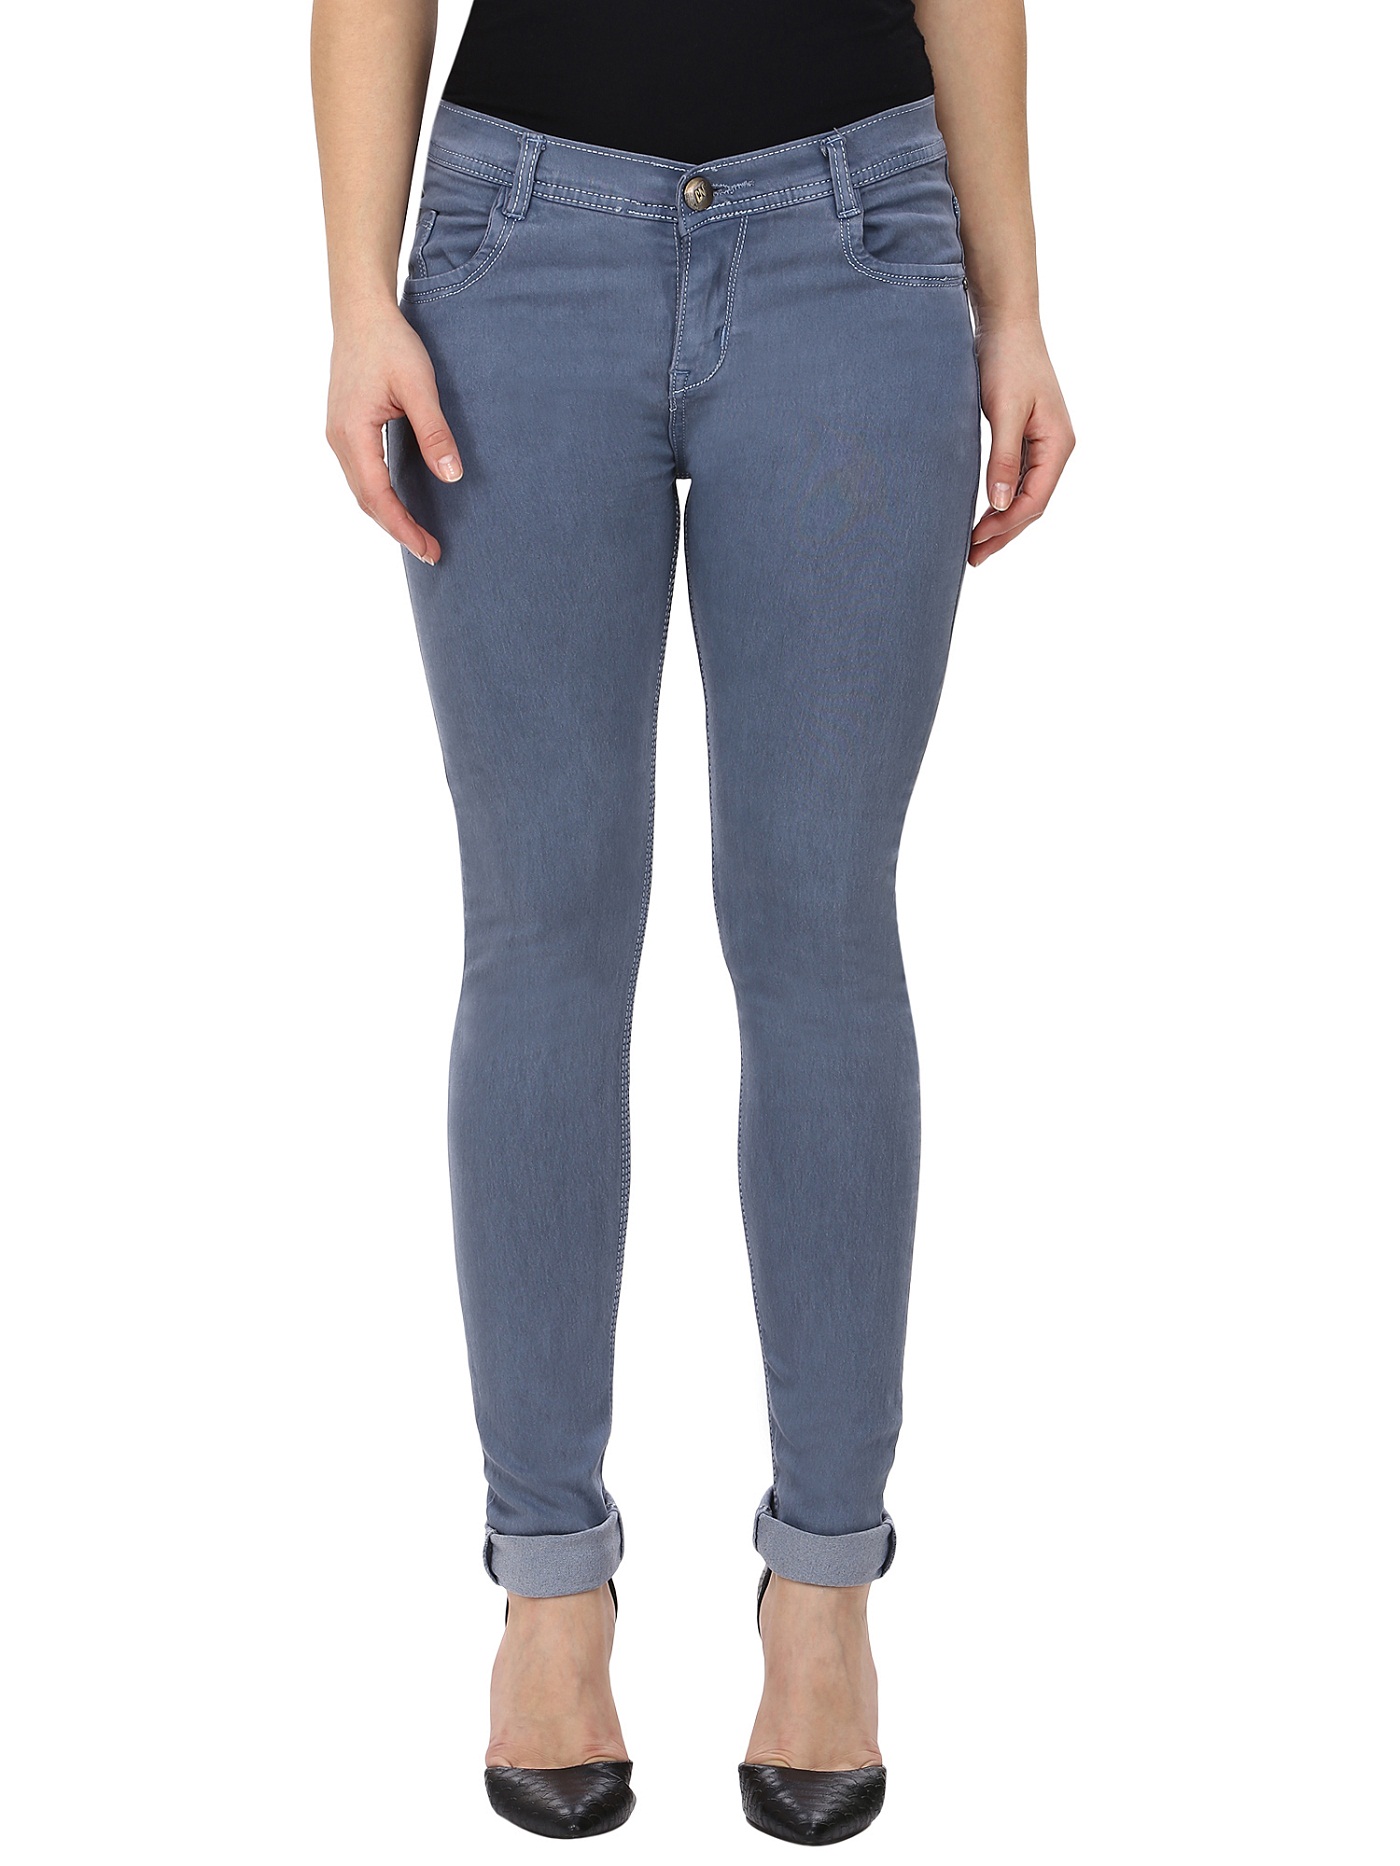 Buy NJs Slim Women Grey Jeans Online @ ₹449 from ShopClues